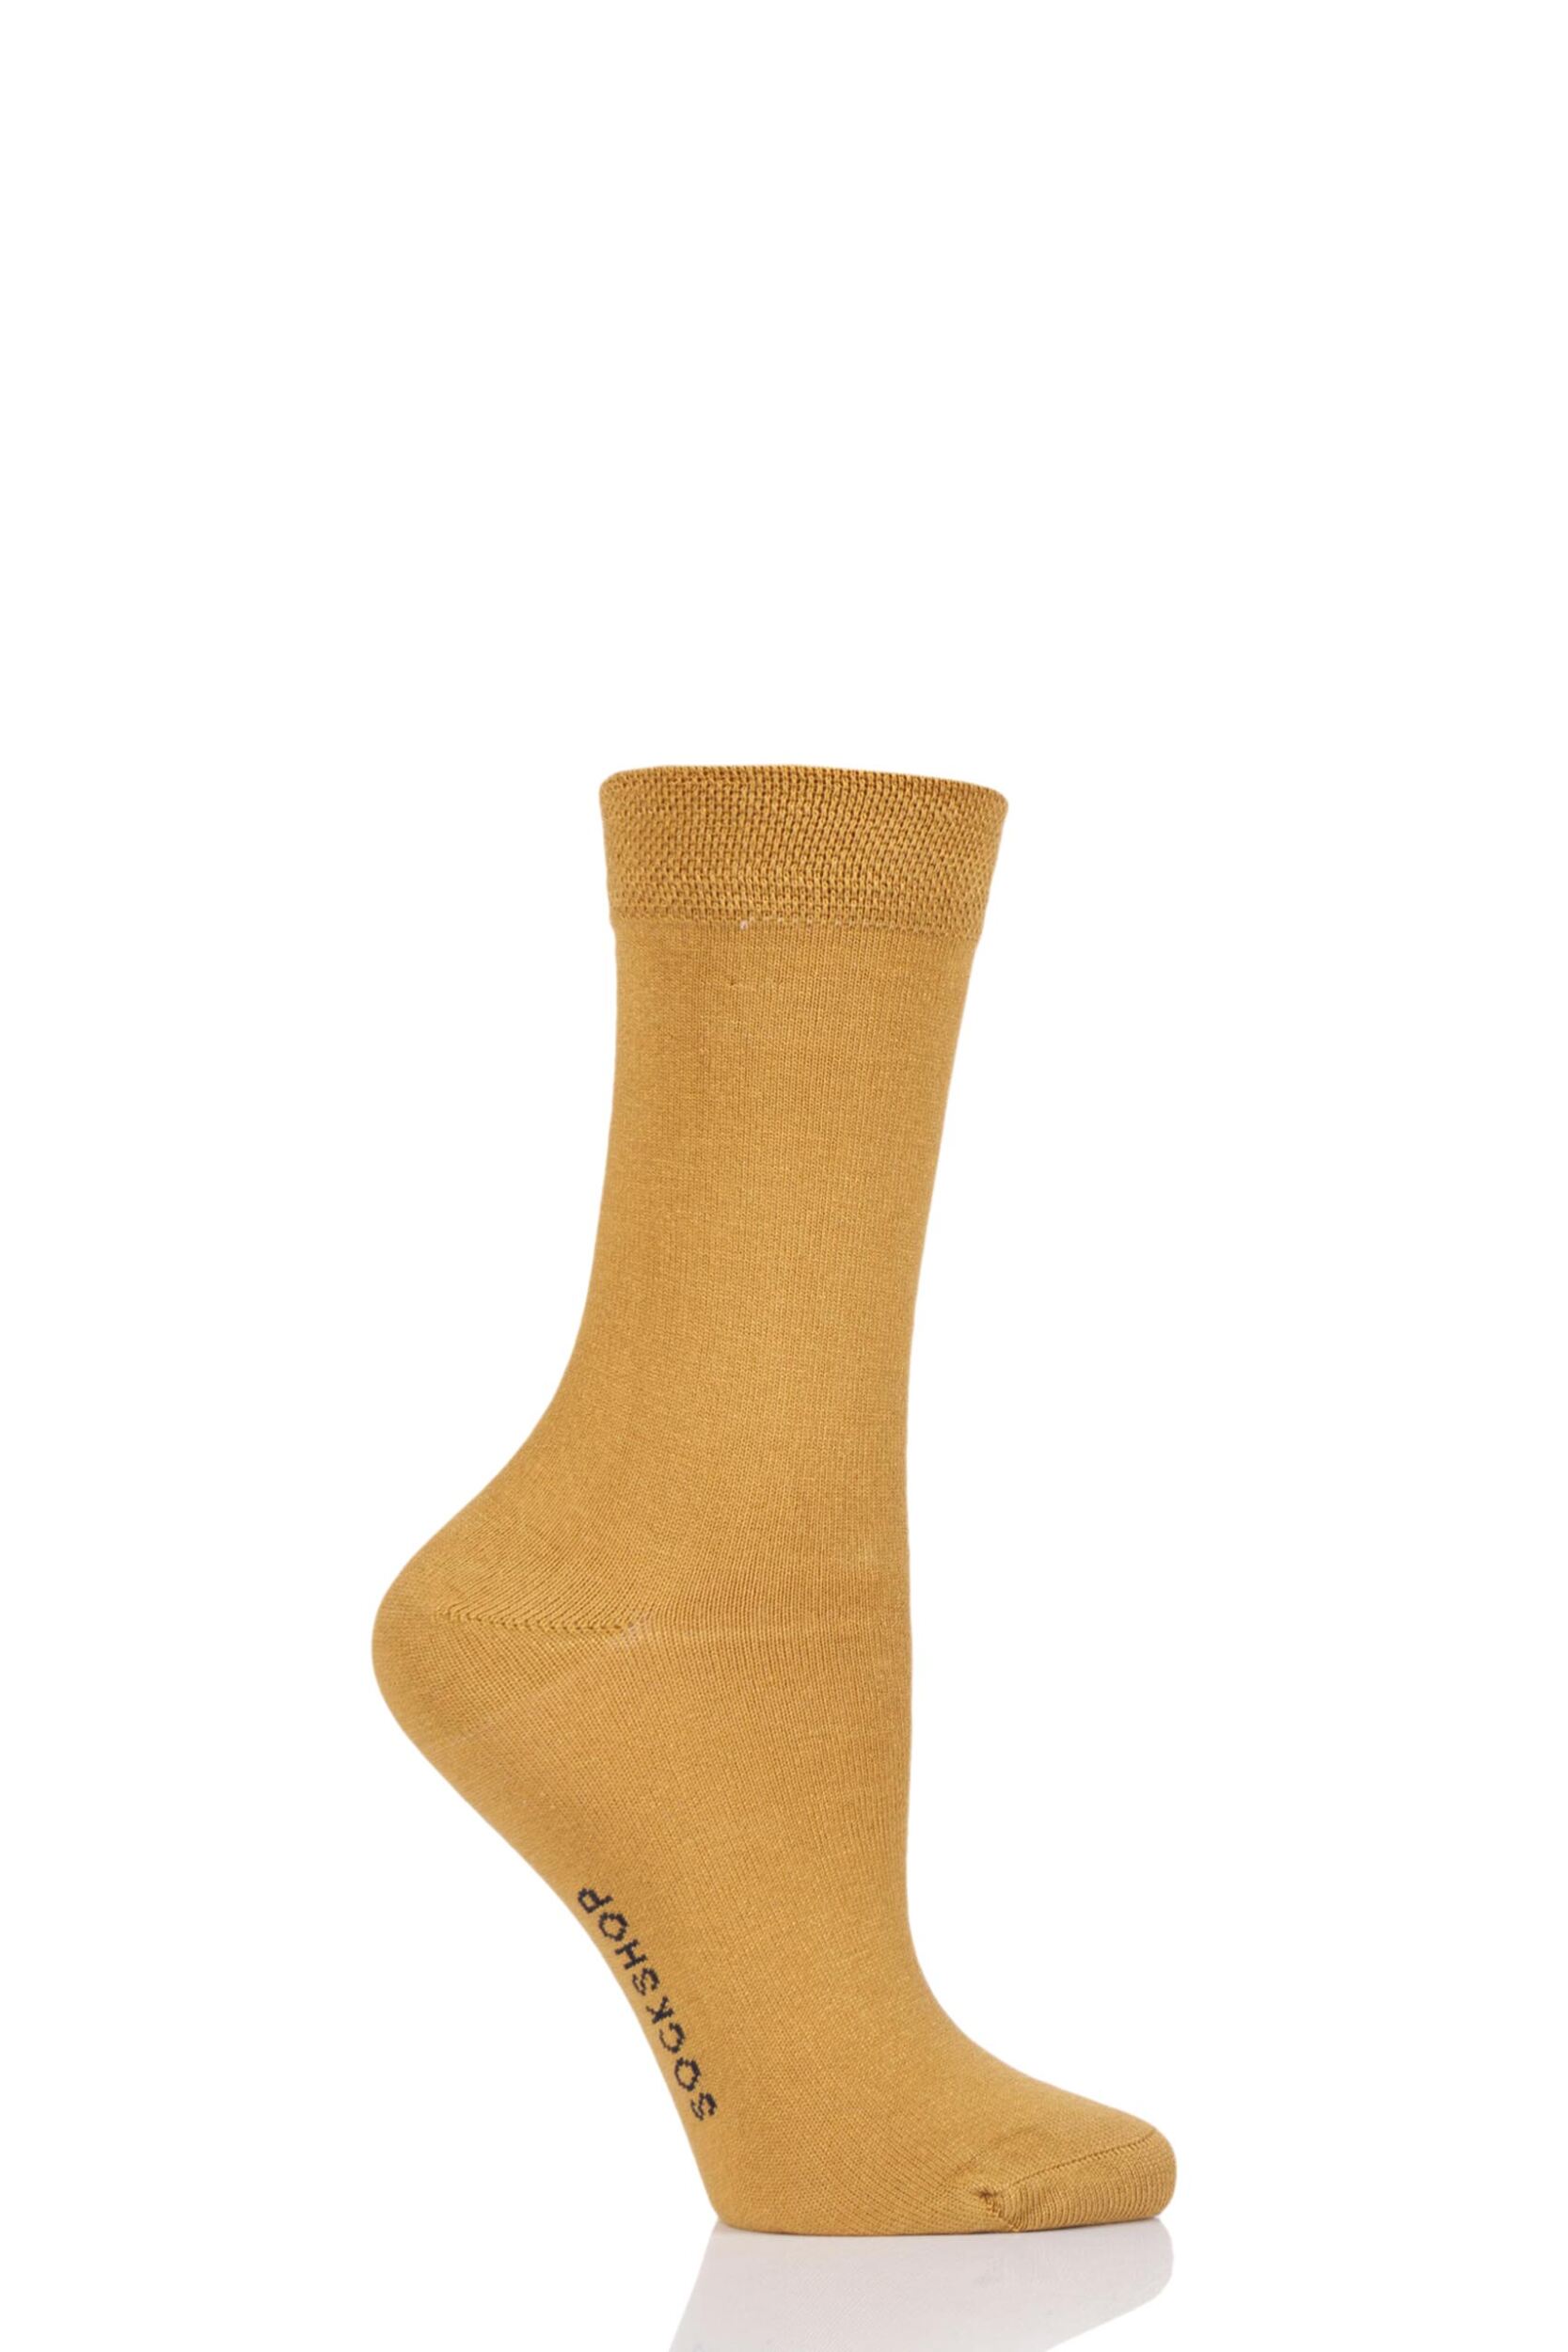 1 Pair Mellow Yellow Colour Burst Bamboo Socks with Smooth Toe Seams Ladies 4-8 Ladies - SOCKSHOP